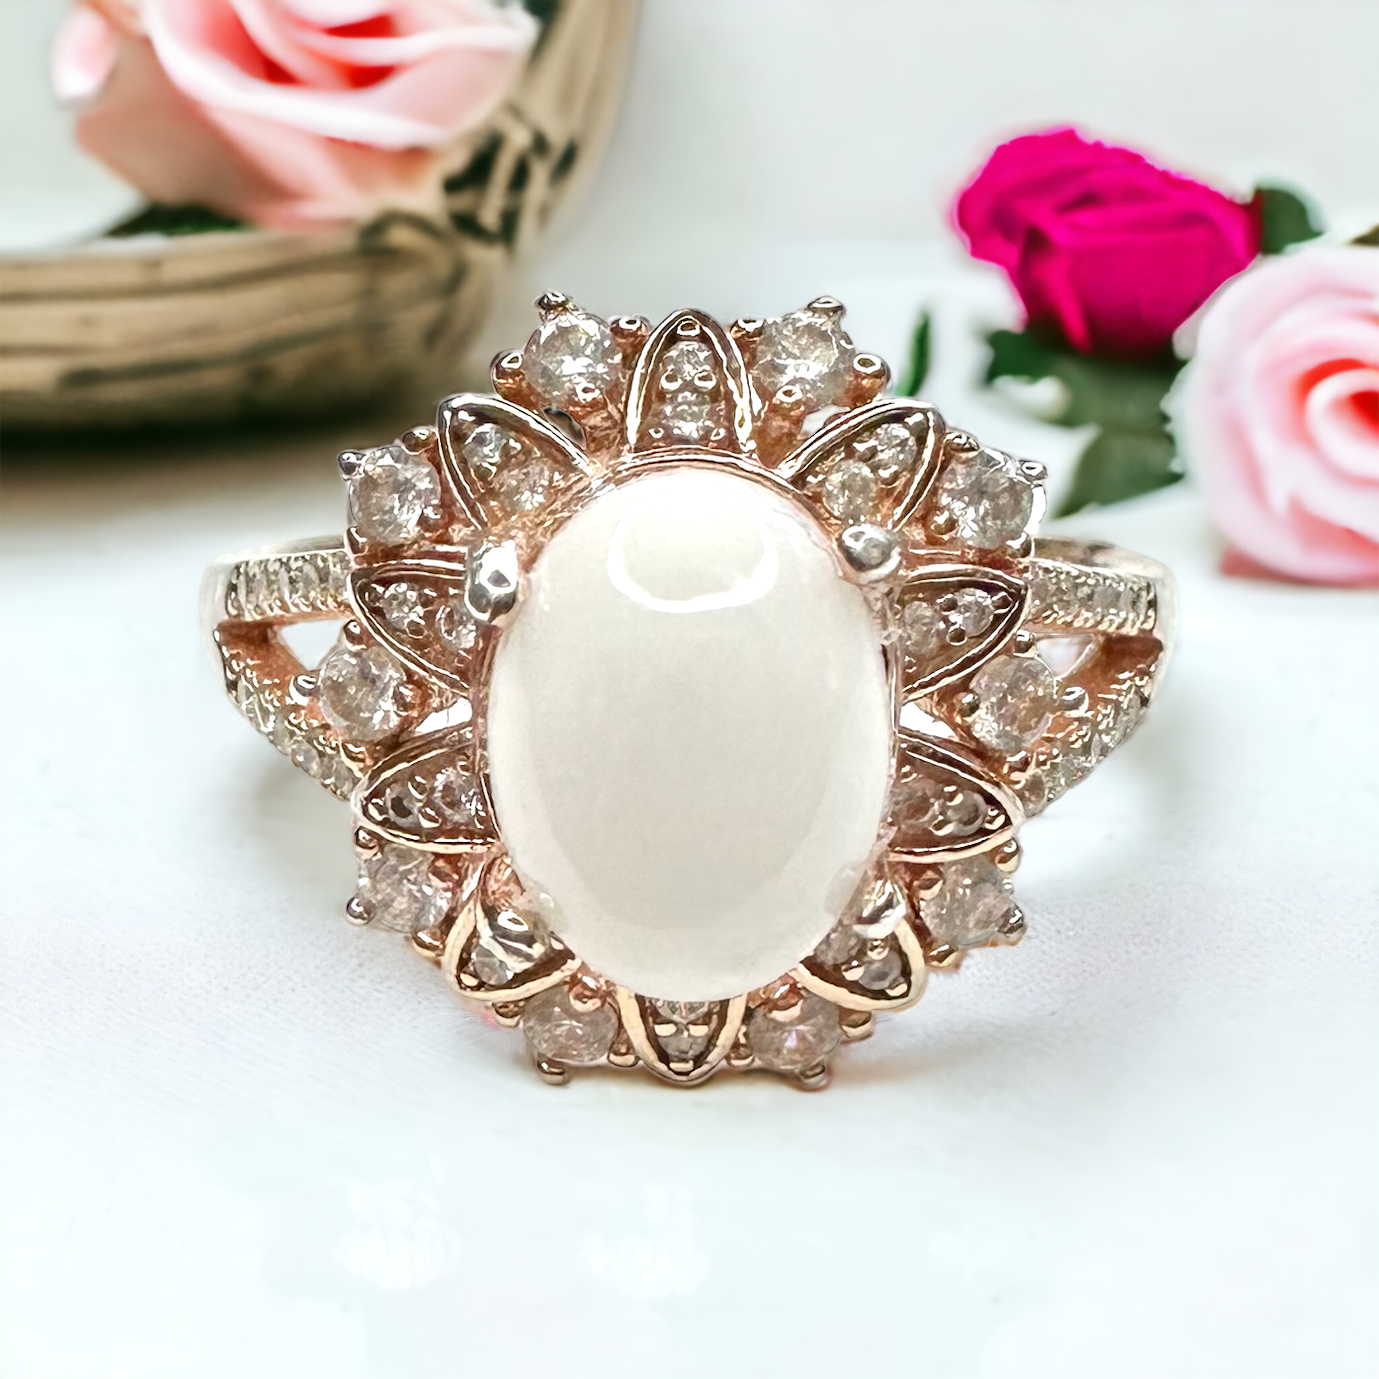 Wishbone Gold Ring Set in White Crystal